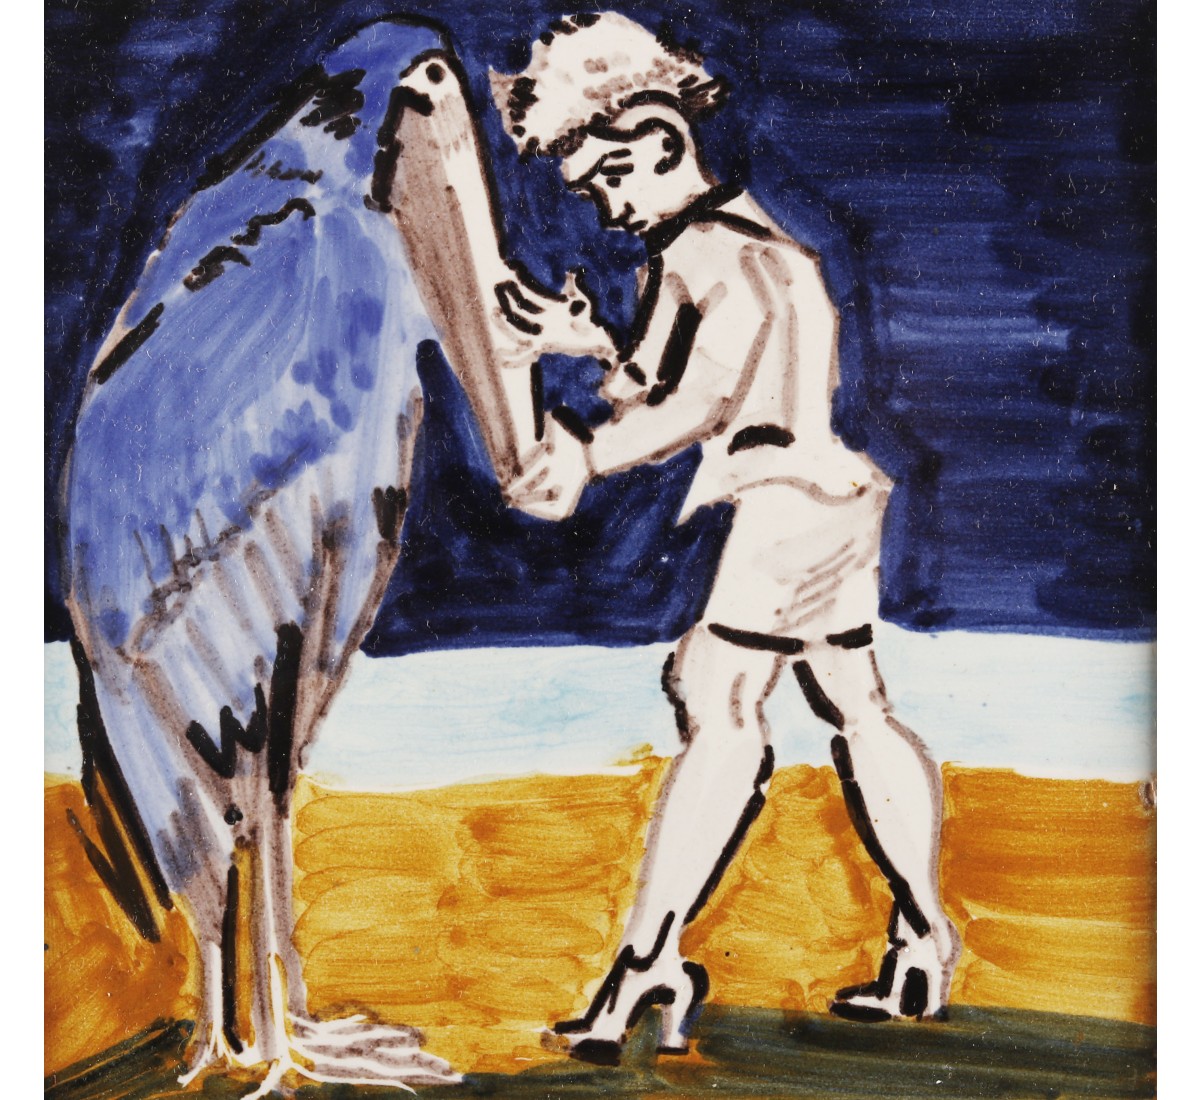 PAULA REGO (1935)